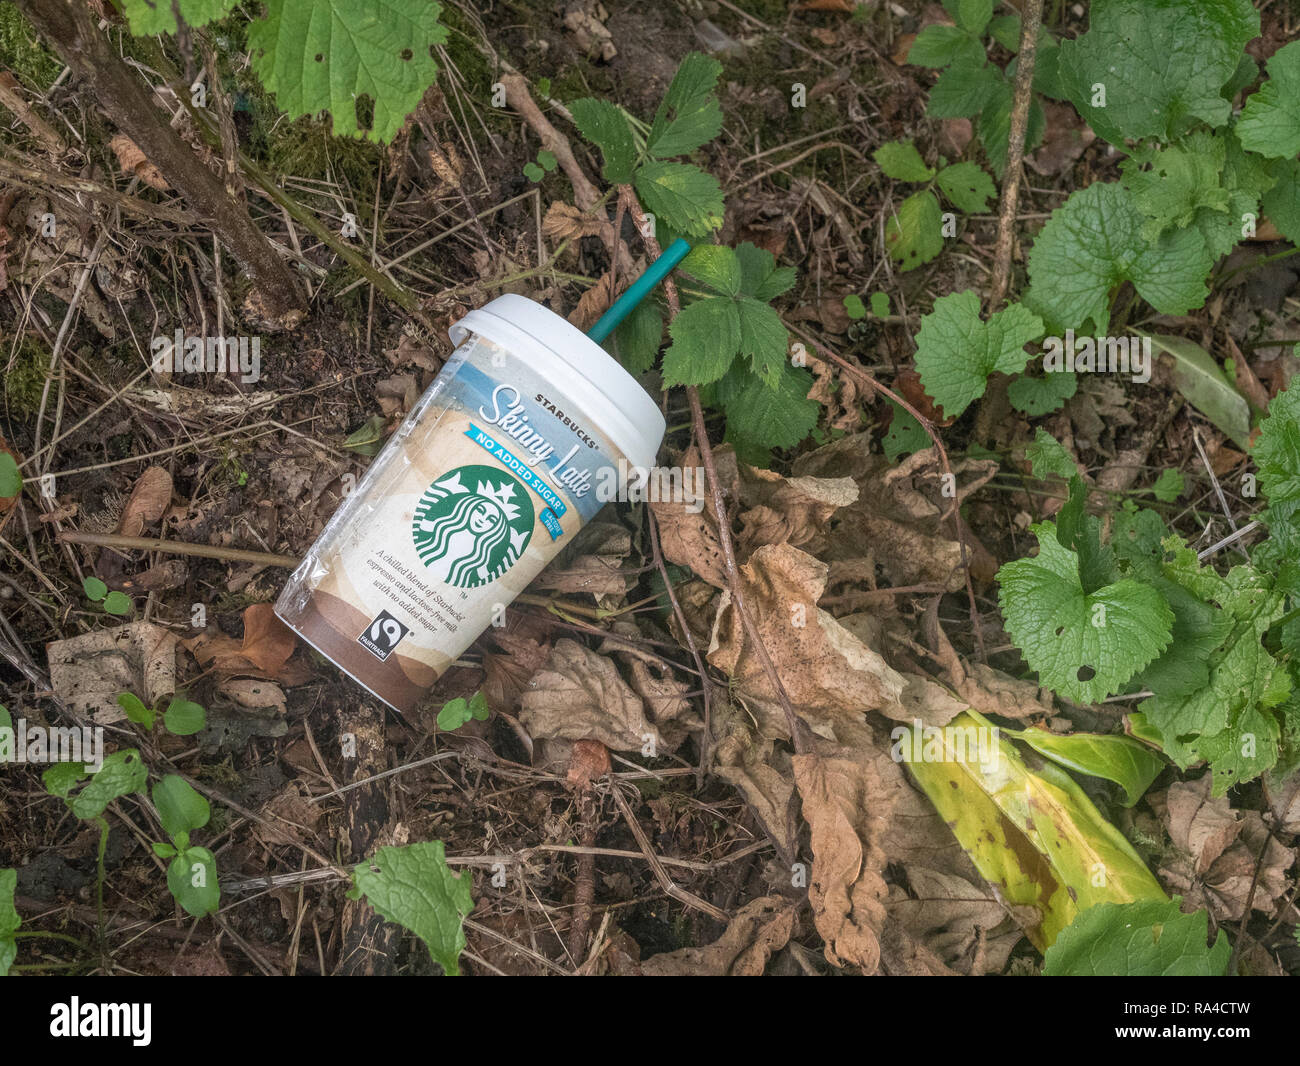 Discarded worn Starbucks plastic takeaway coffee cup seen in Cornish roadside hedgerow. War on plastic, plastic pollution, polluting the environment. Stock Photo